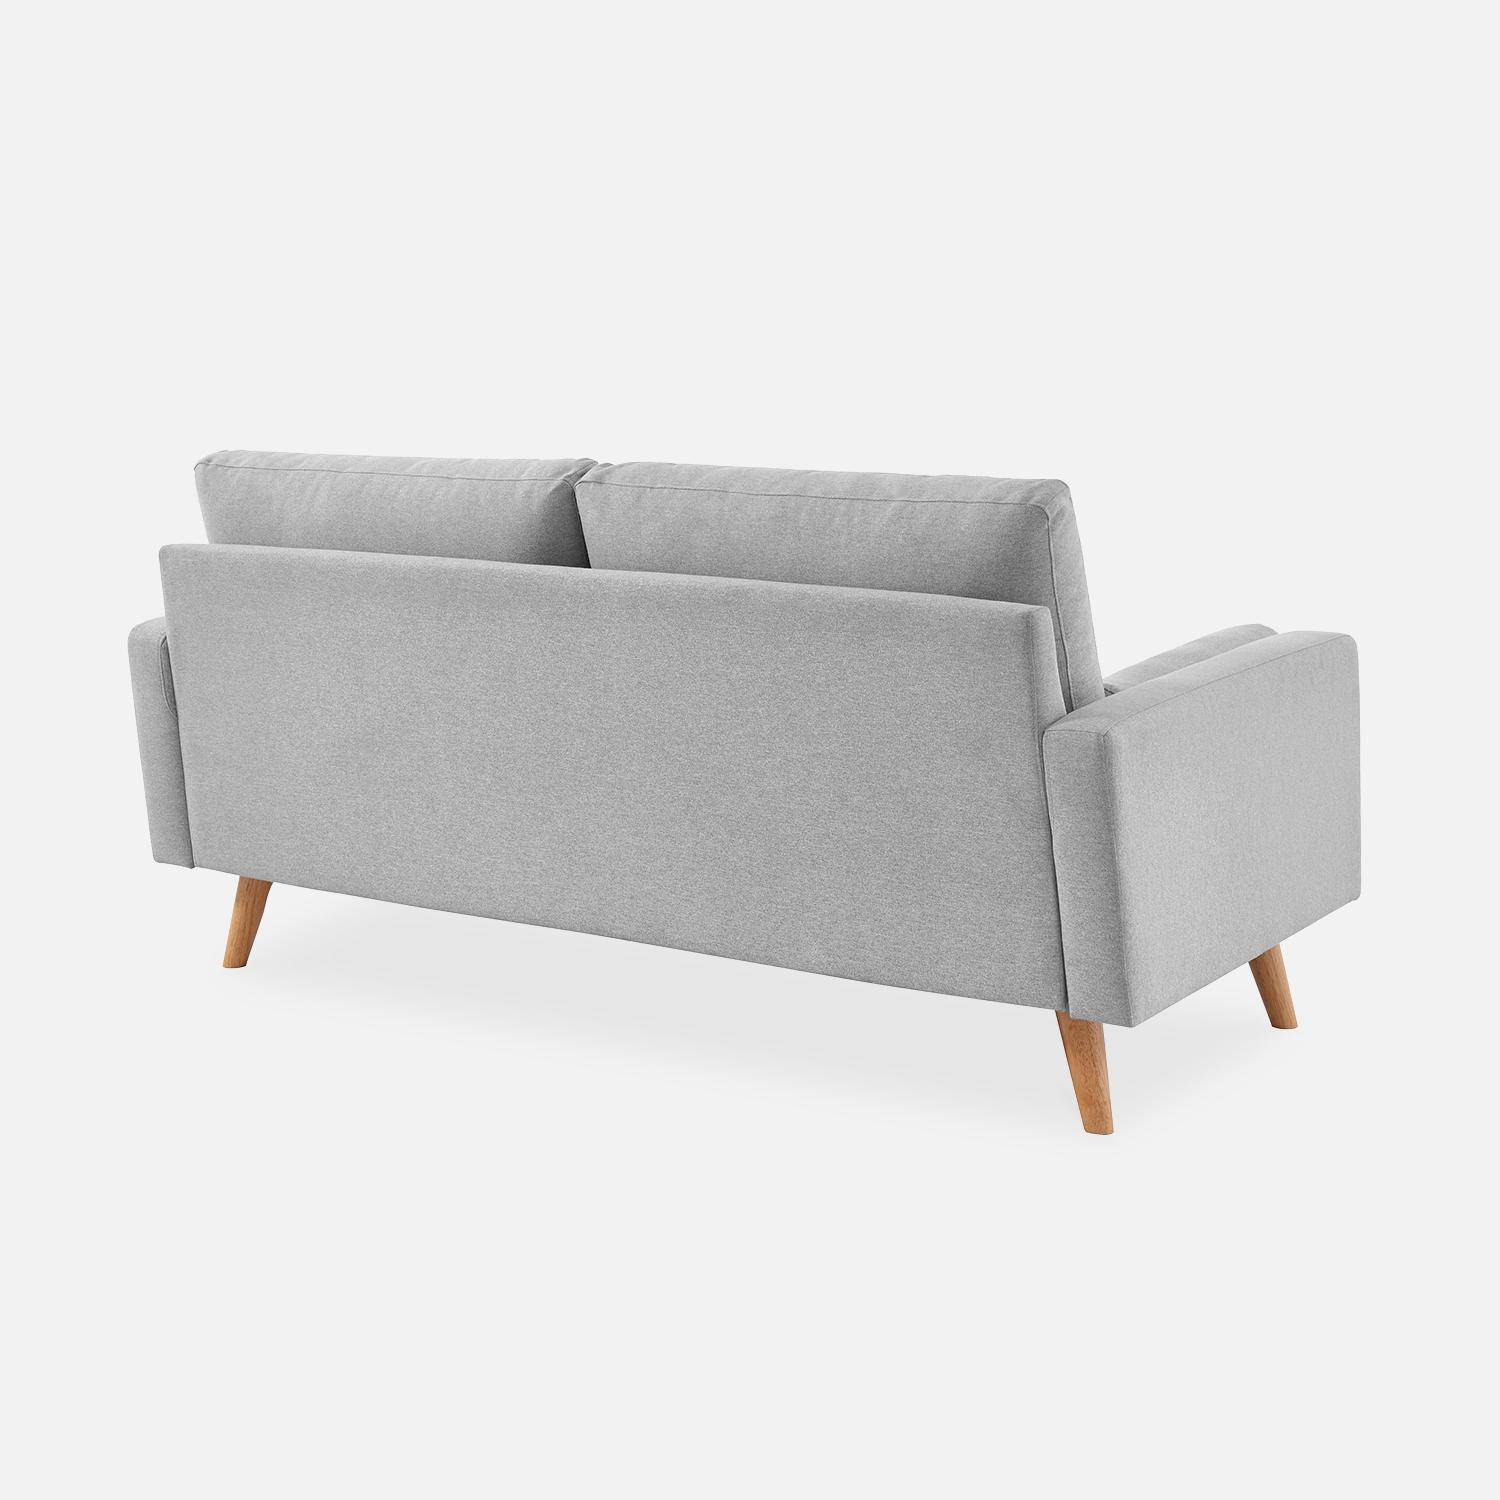 3-seater sofa with Scandi style wooden legs - Ivar - Grey,sweeek,Photo5